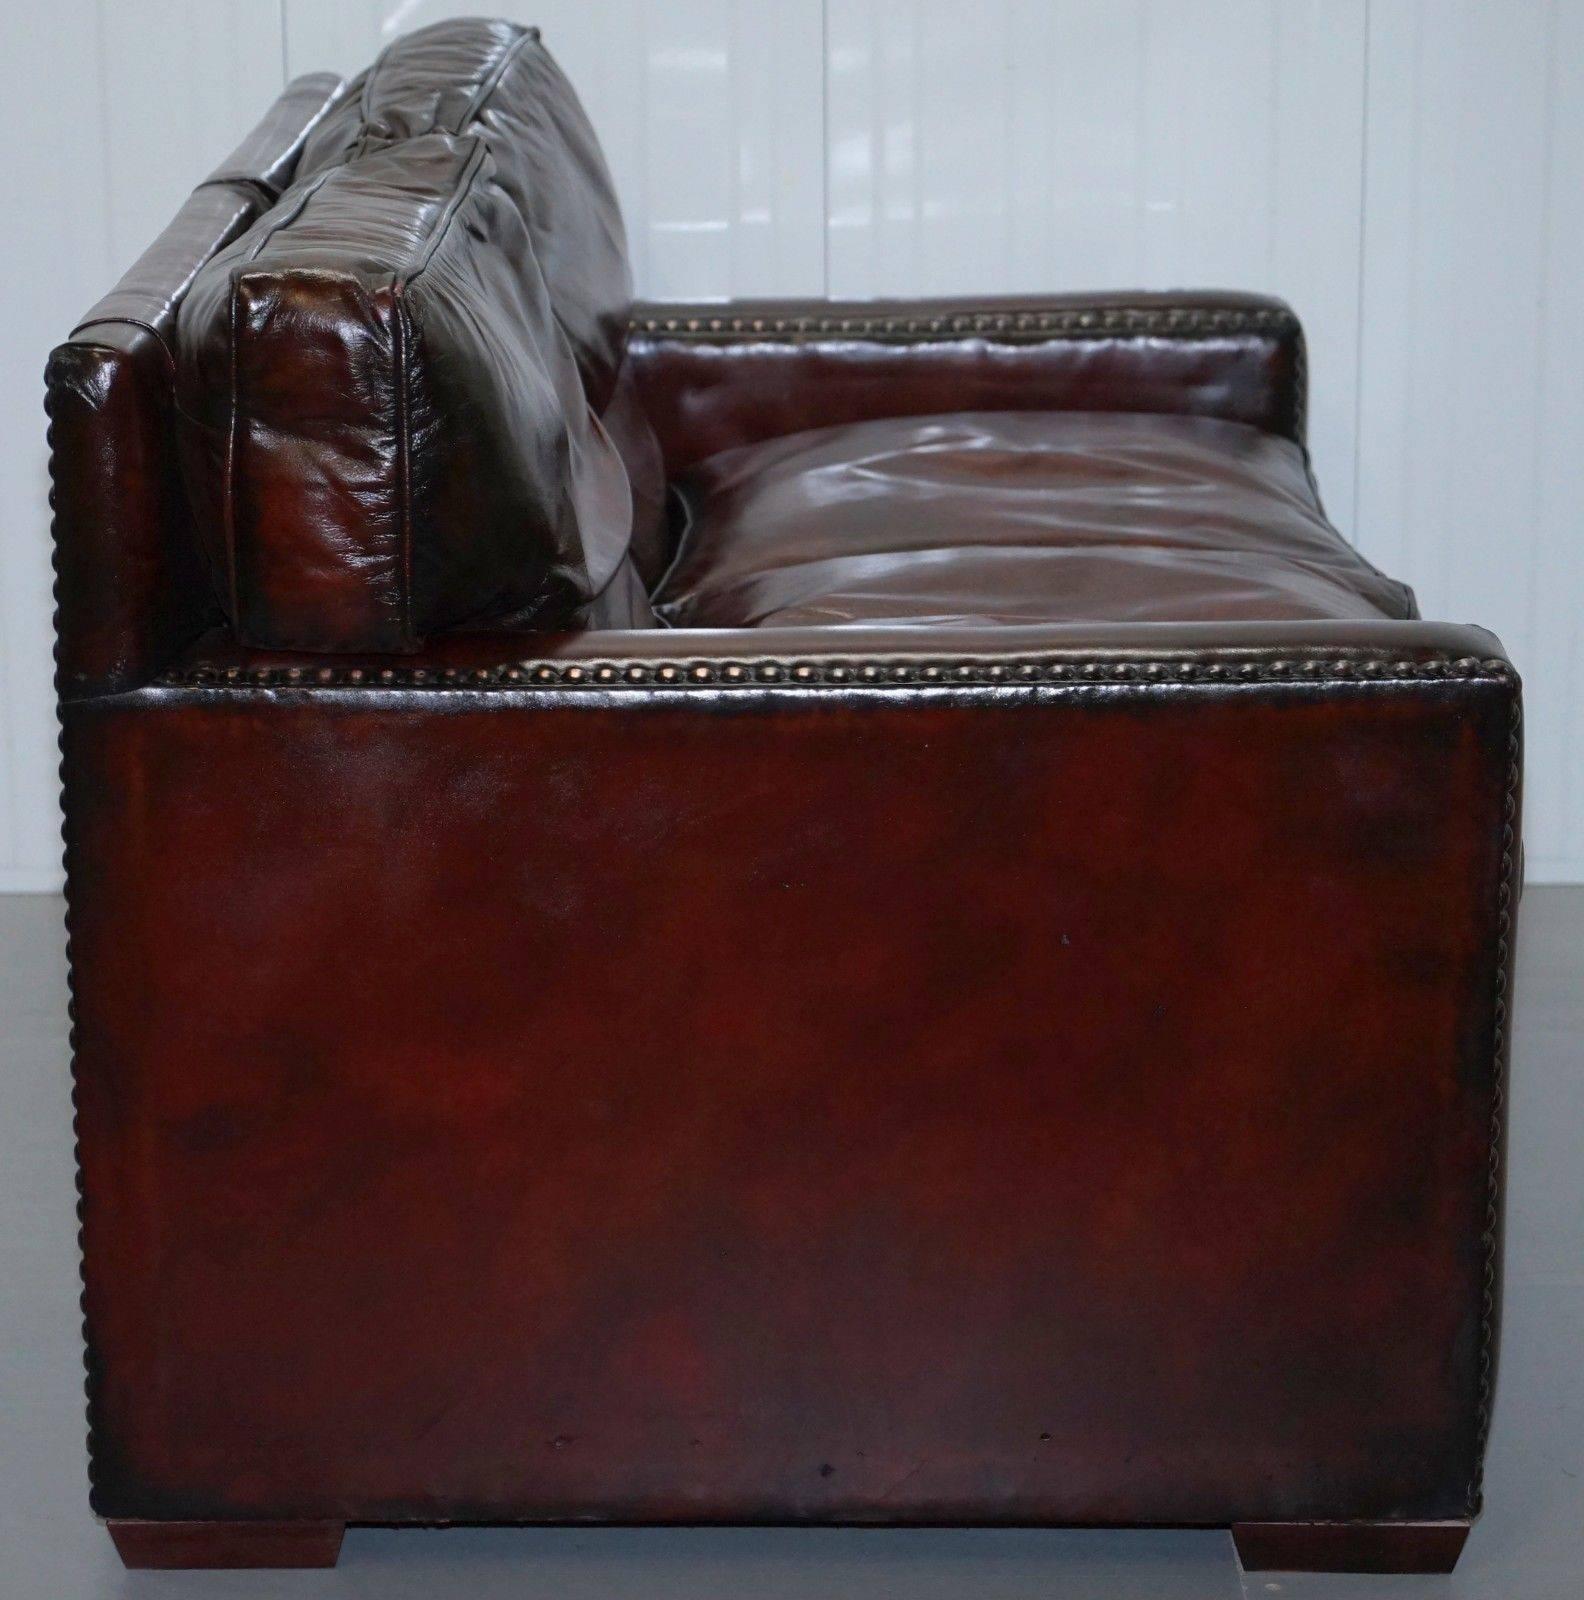 Restored Vintage Handmade in Chelsea Bordeaux Leather Sofa Part of Huge Suite 4